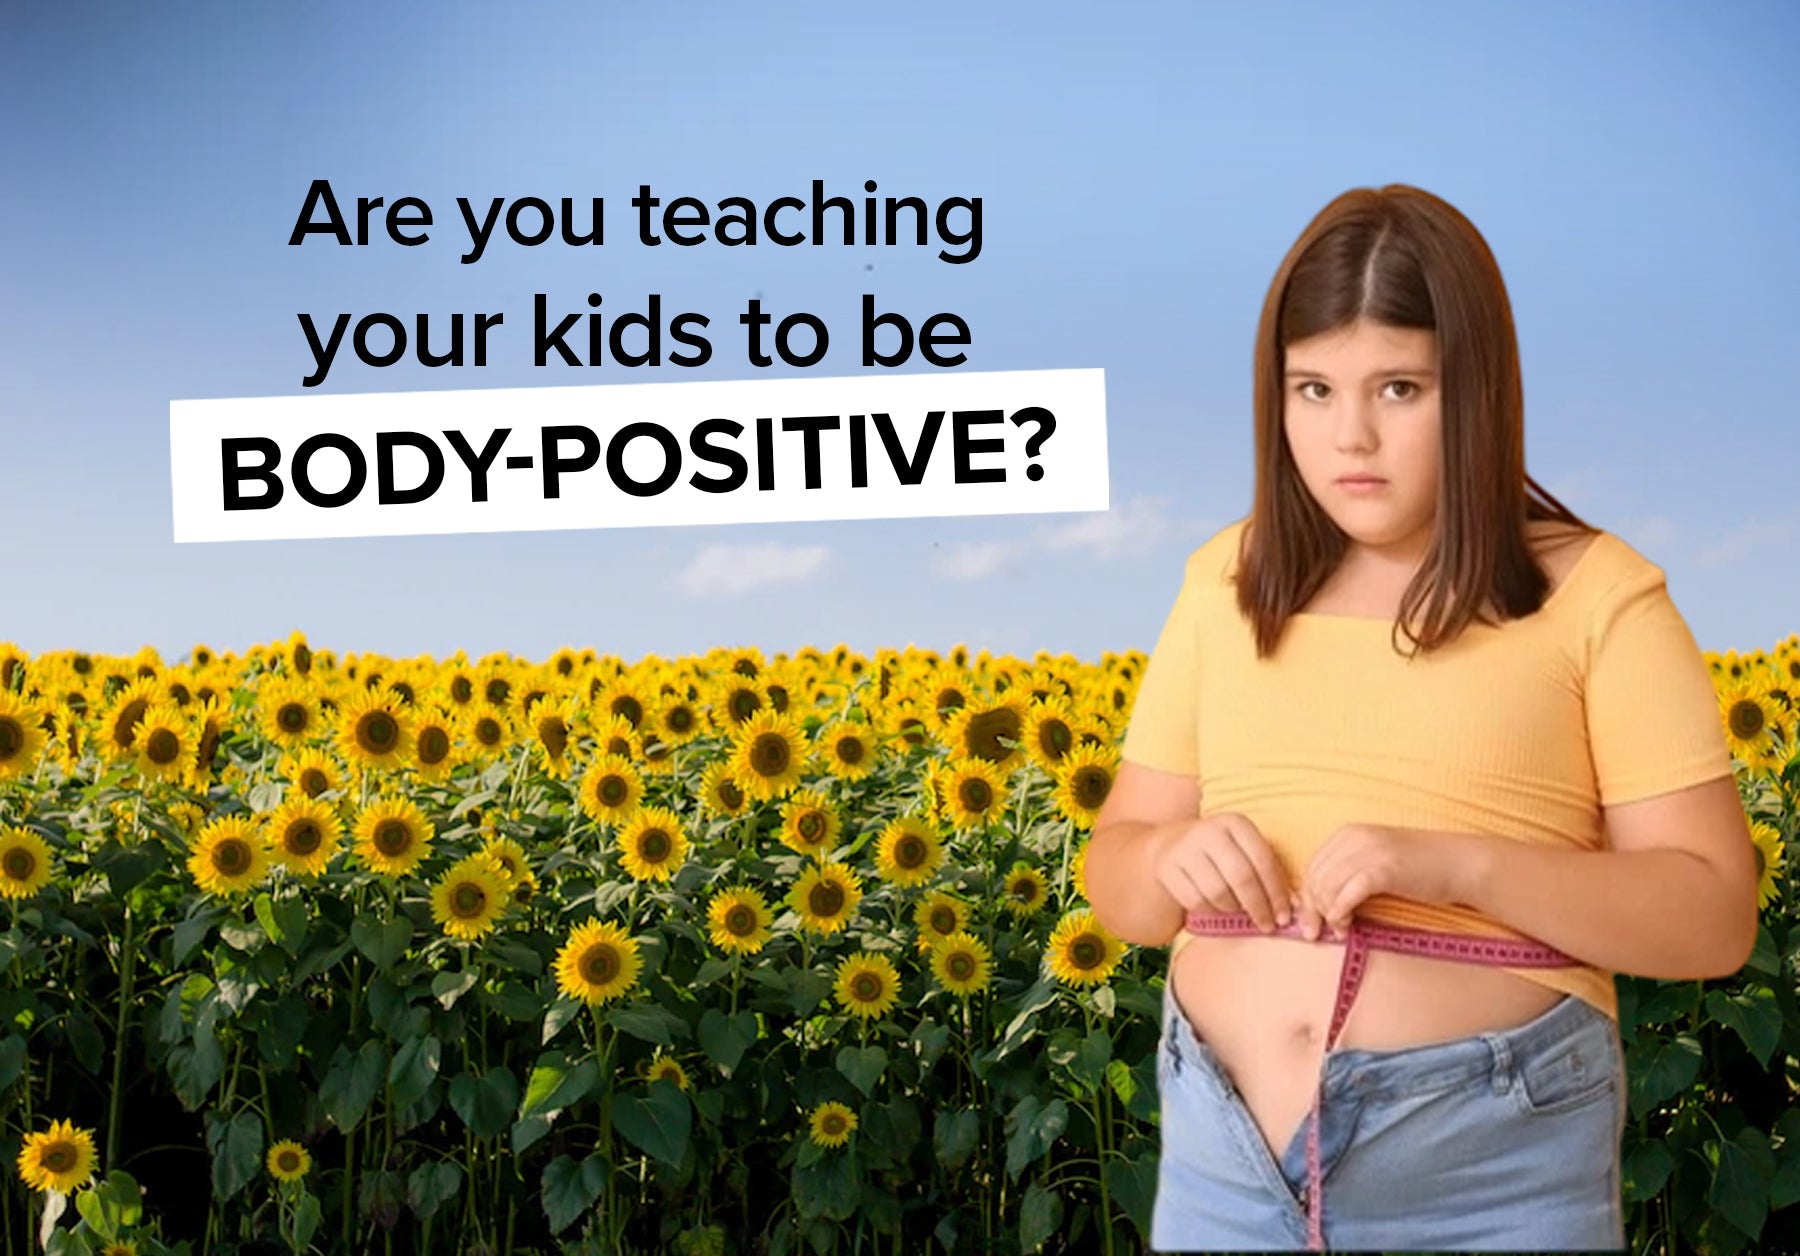 Body-Positivity & Kids: The Road that Must be Taken